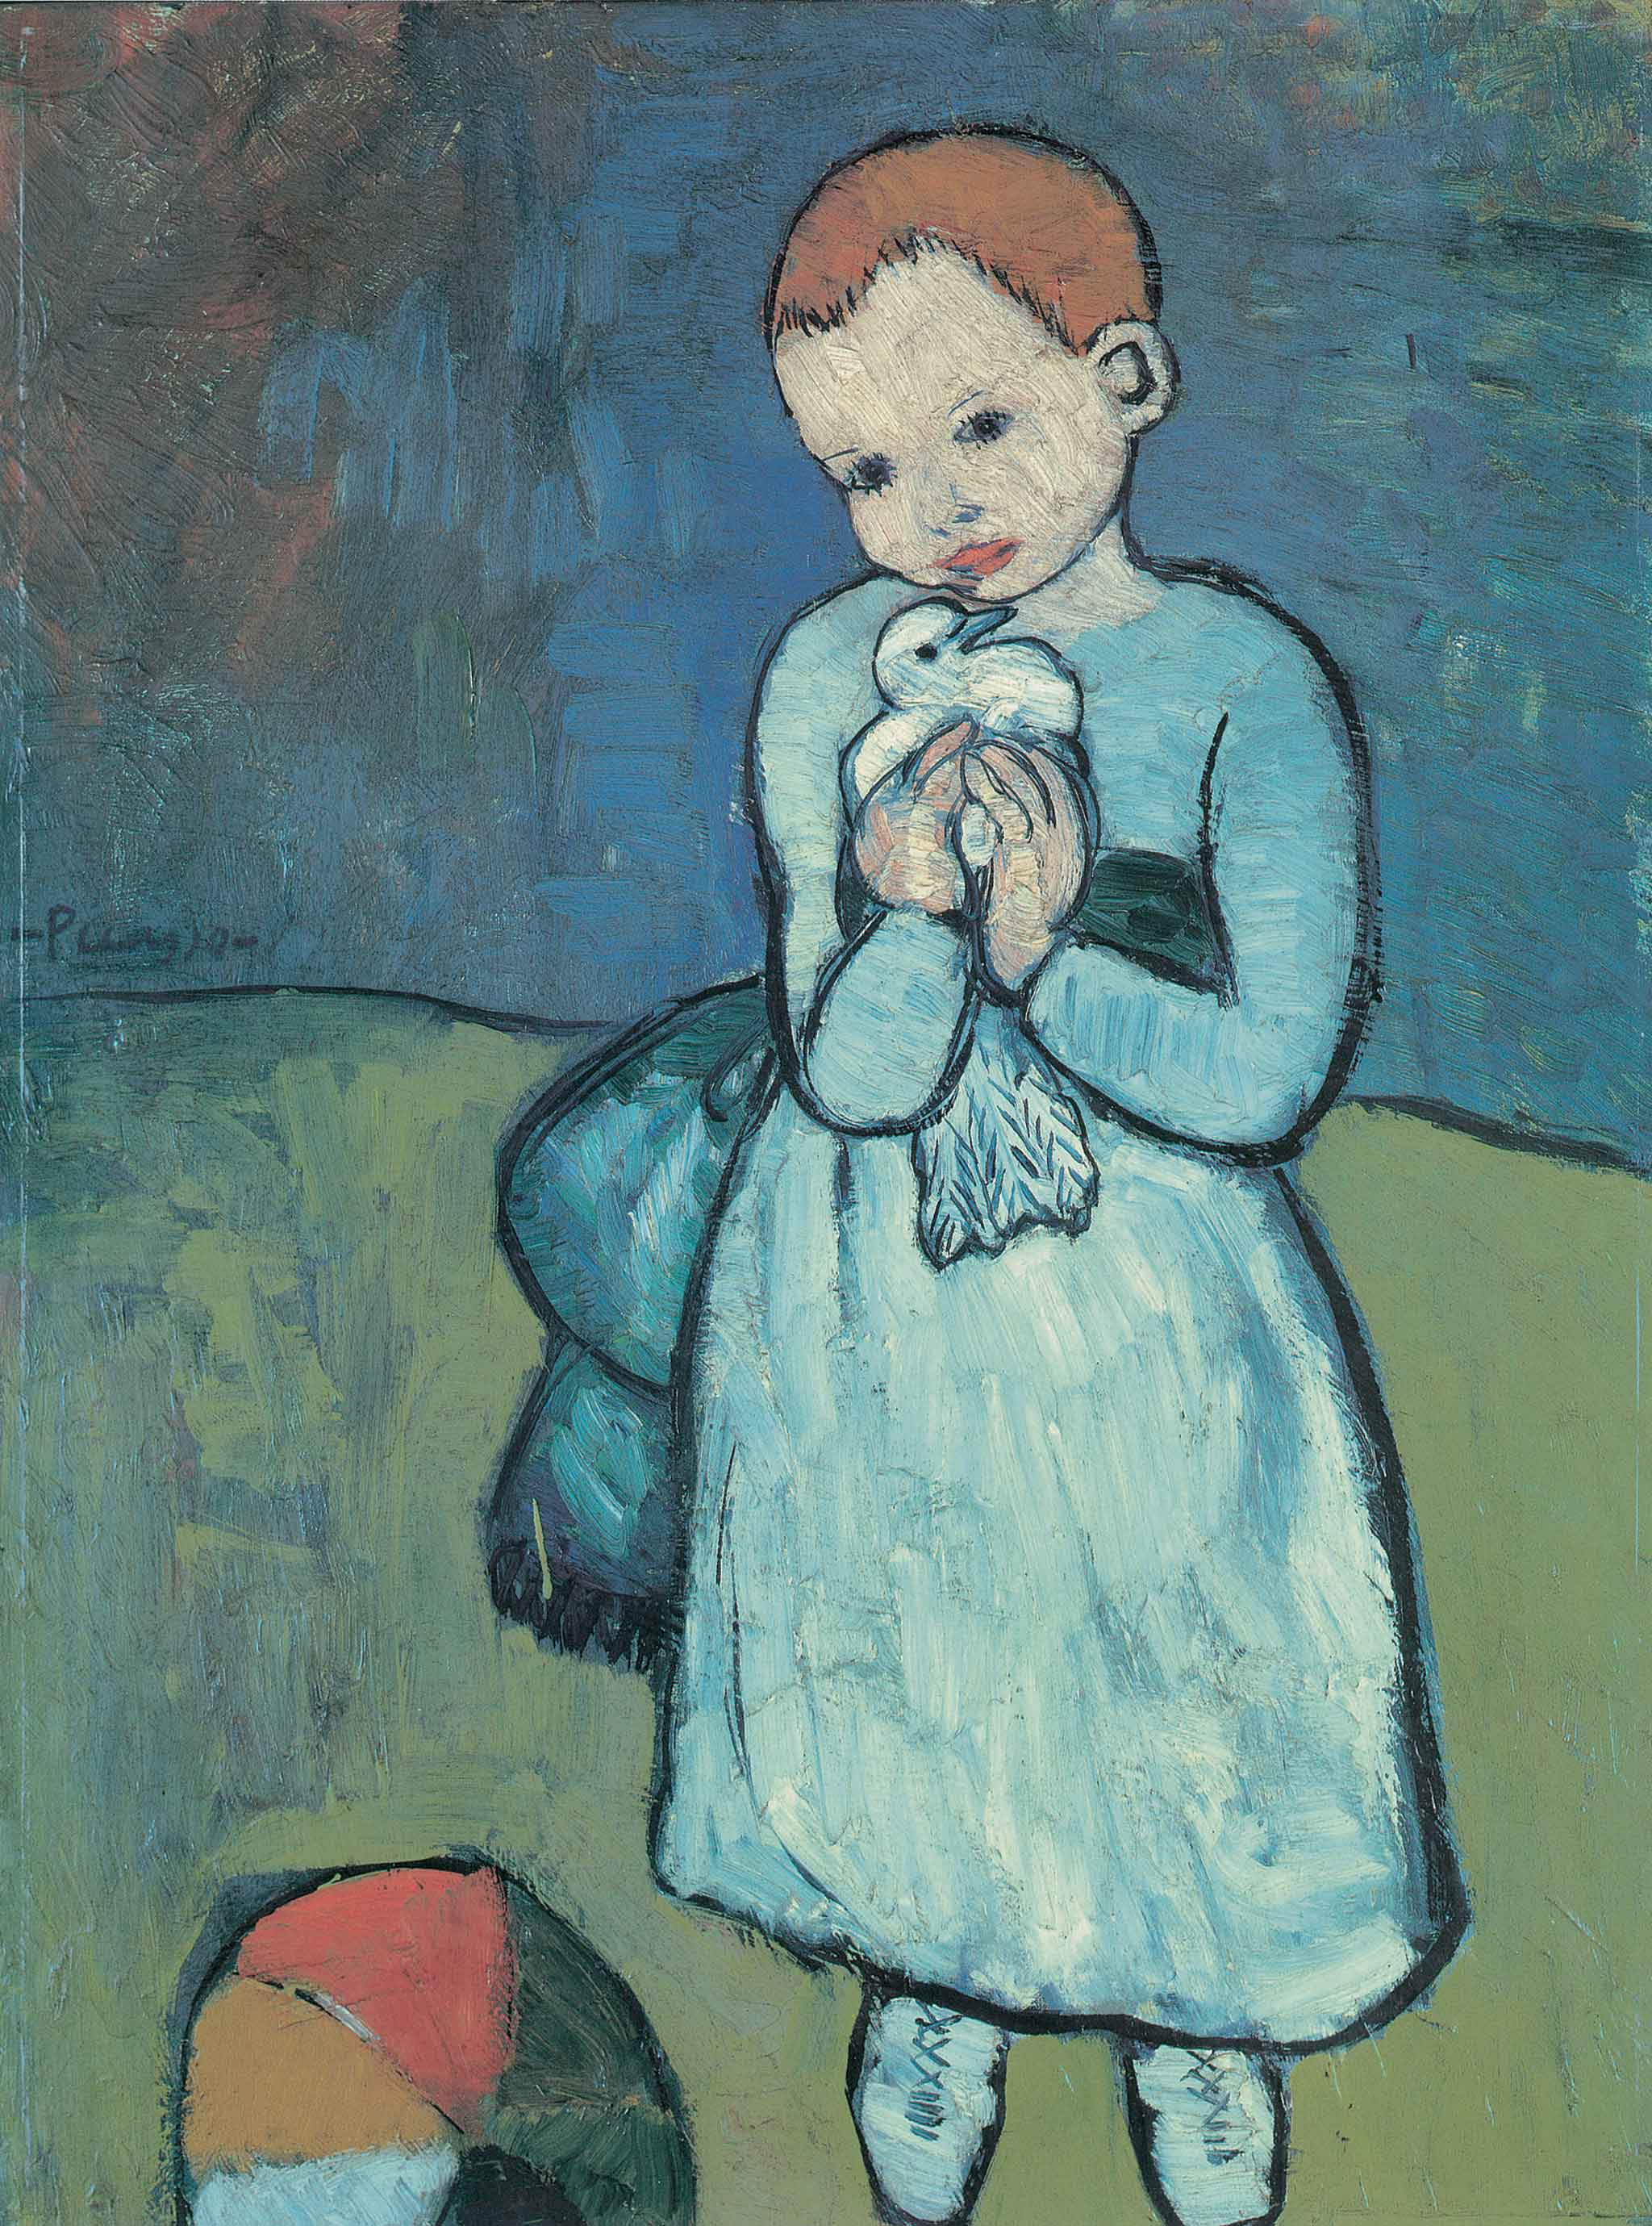 Pablo Picasso's 'Child with a Dove', 1901